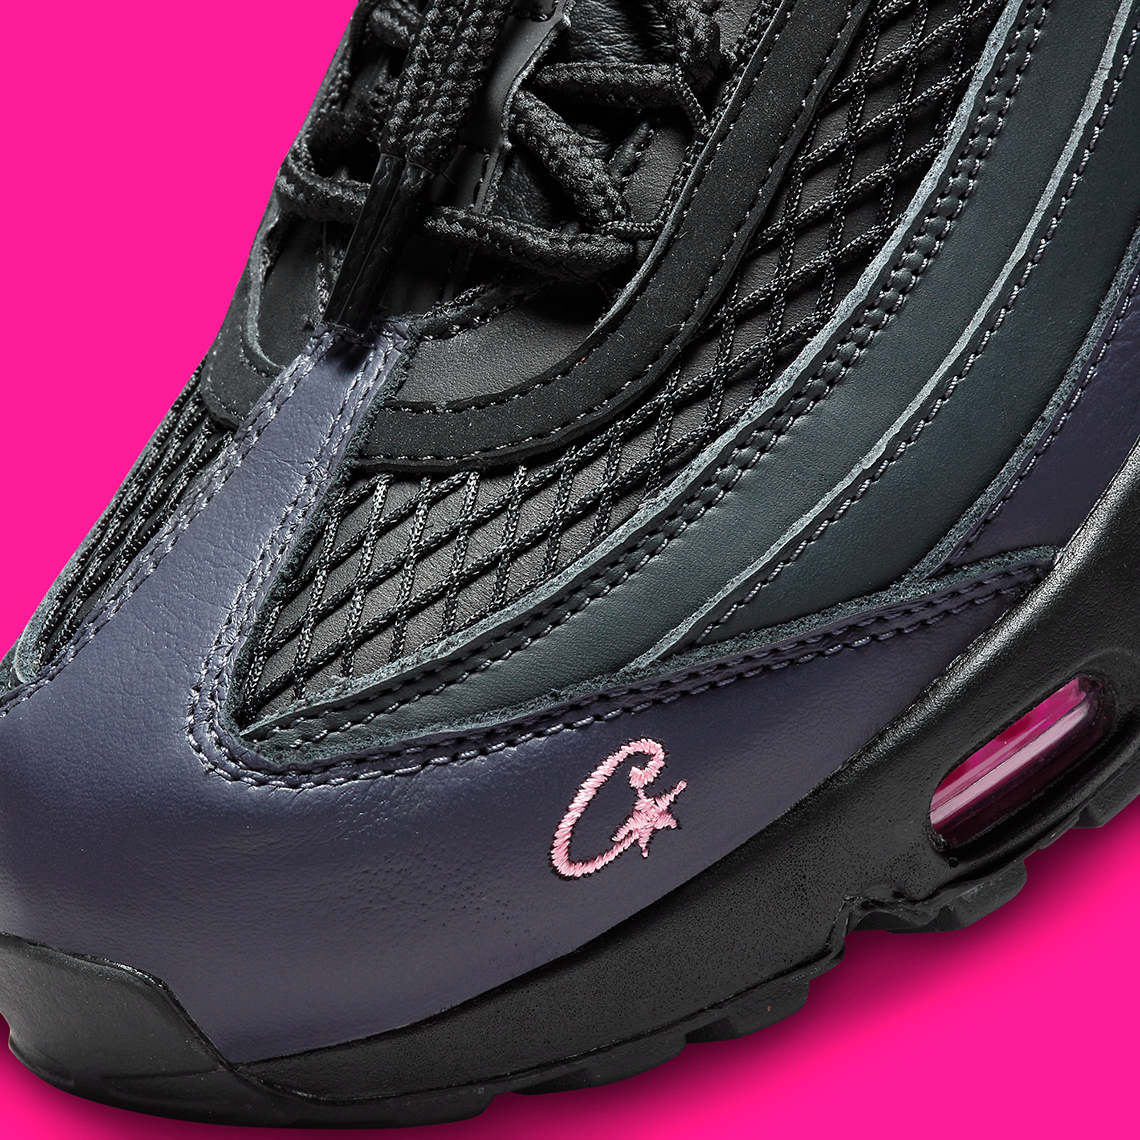 Corteiz Nike Air Max 95 Black Pink Camo Fb2709 001 2